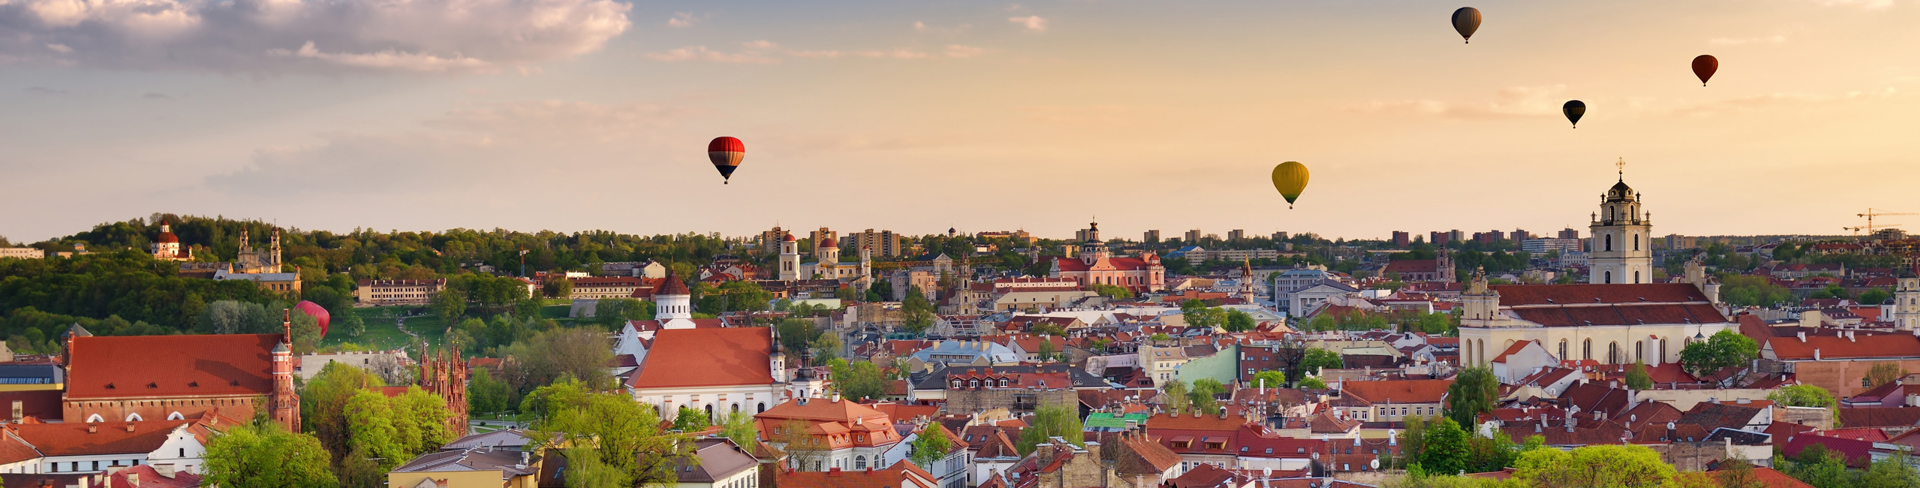 Timetable-to-Lithuania-Klaipėda-ballons-in-the-sky